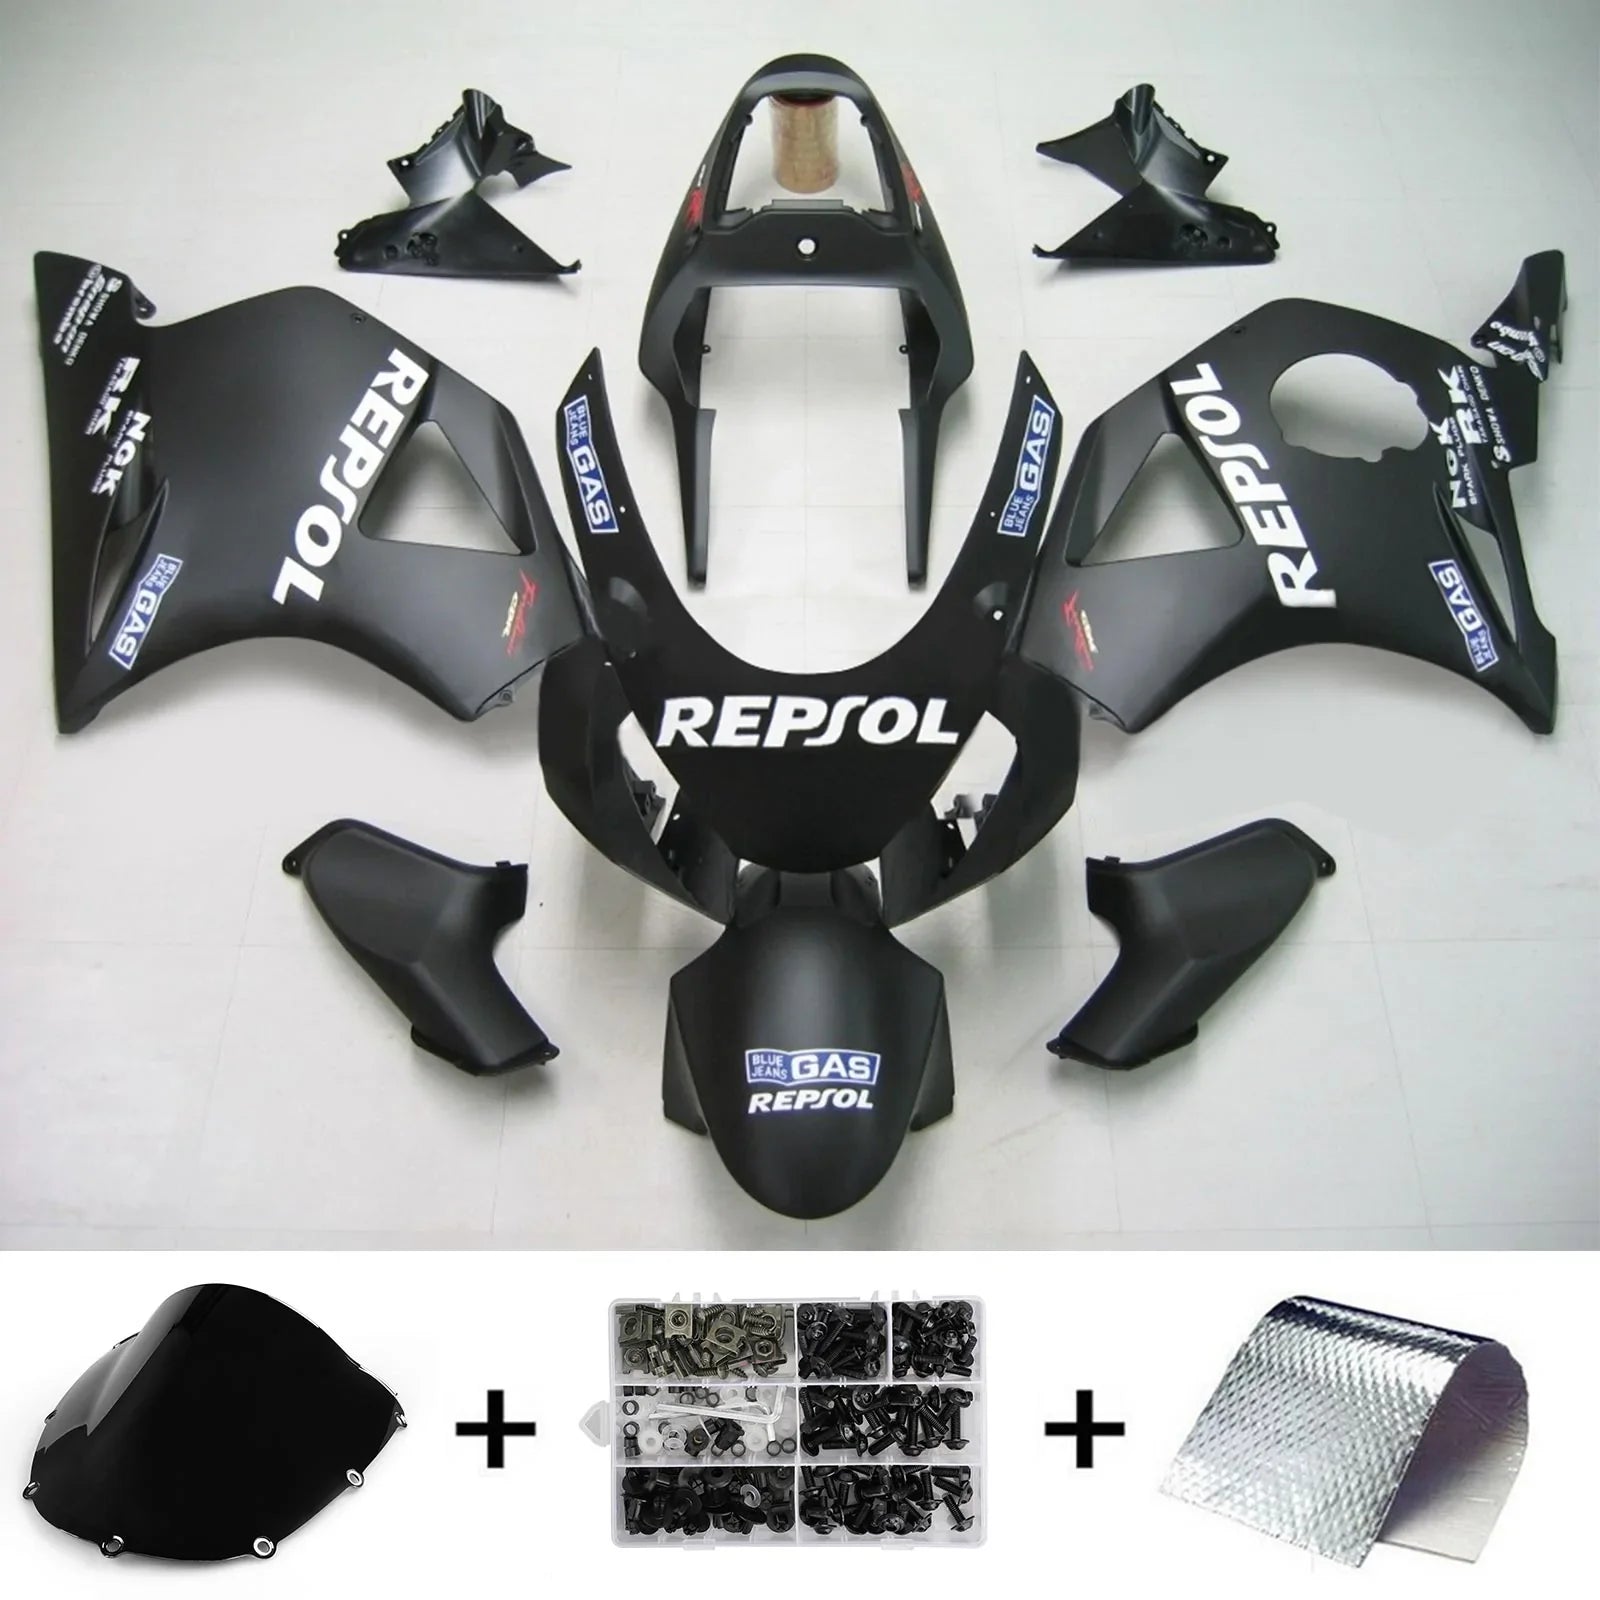 Kit de carénage Amotopart Honda CBR954 2002-2003